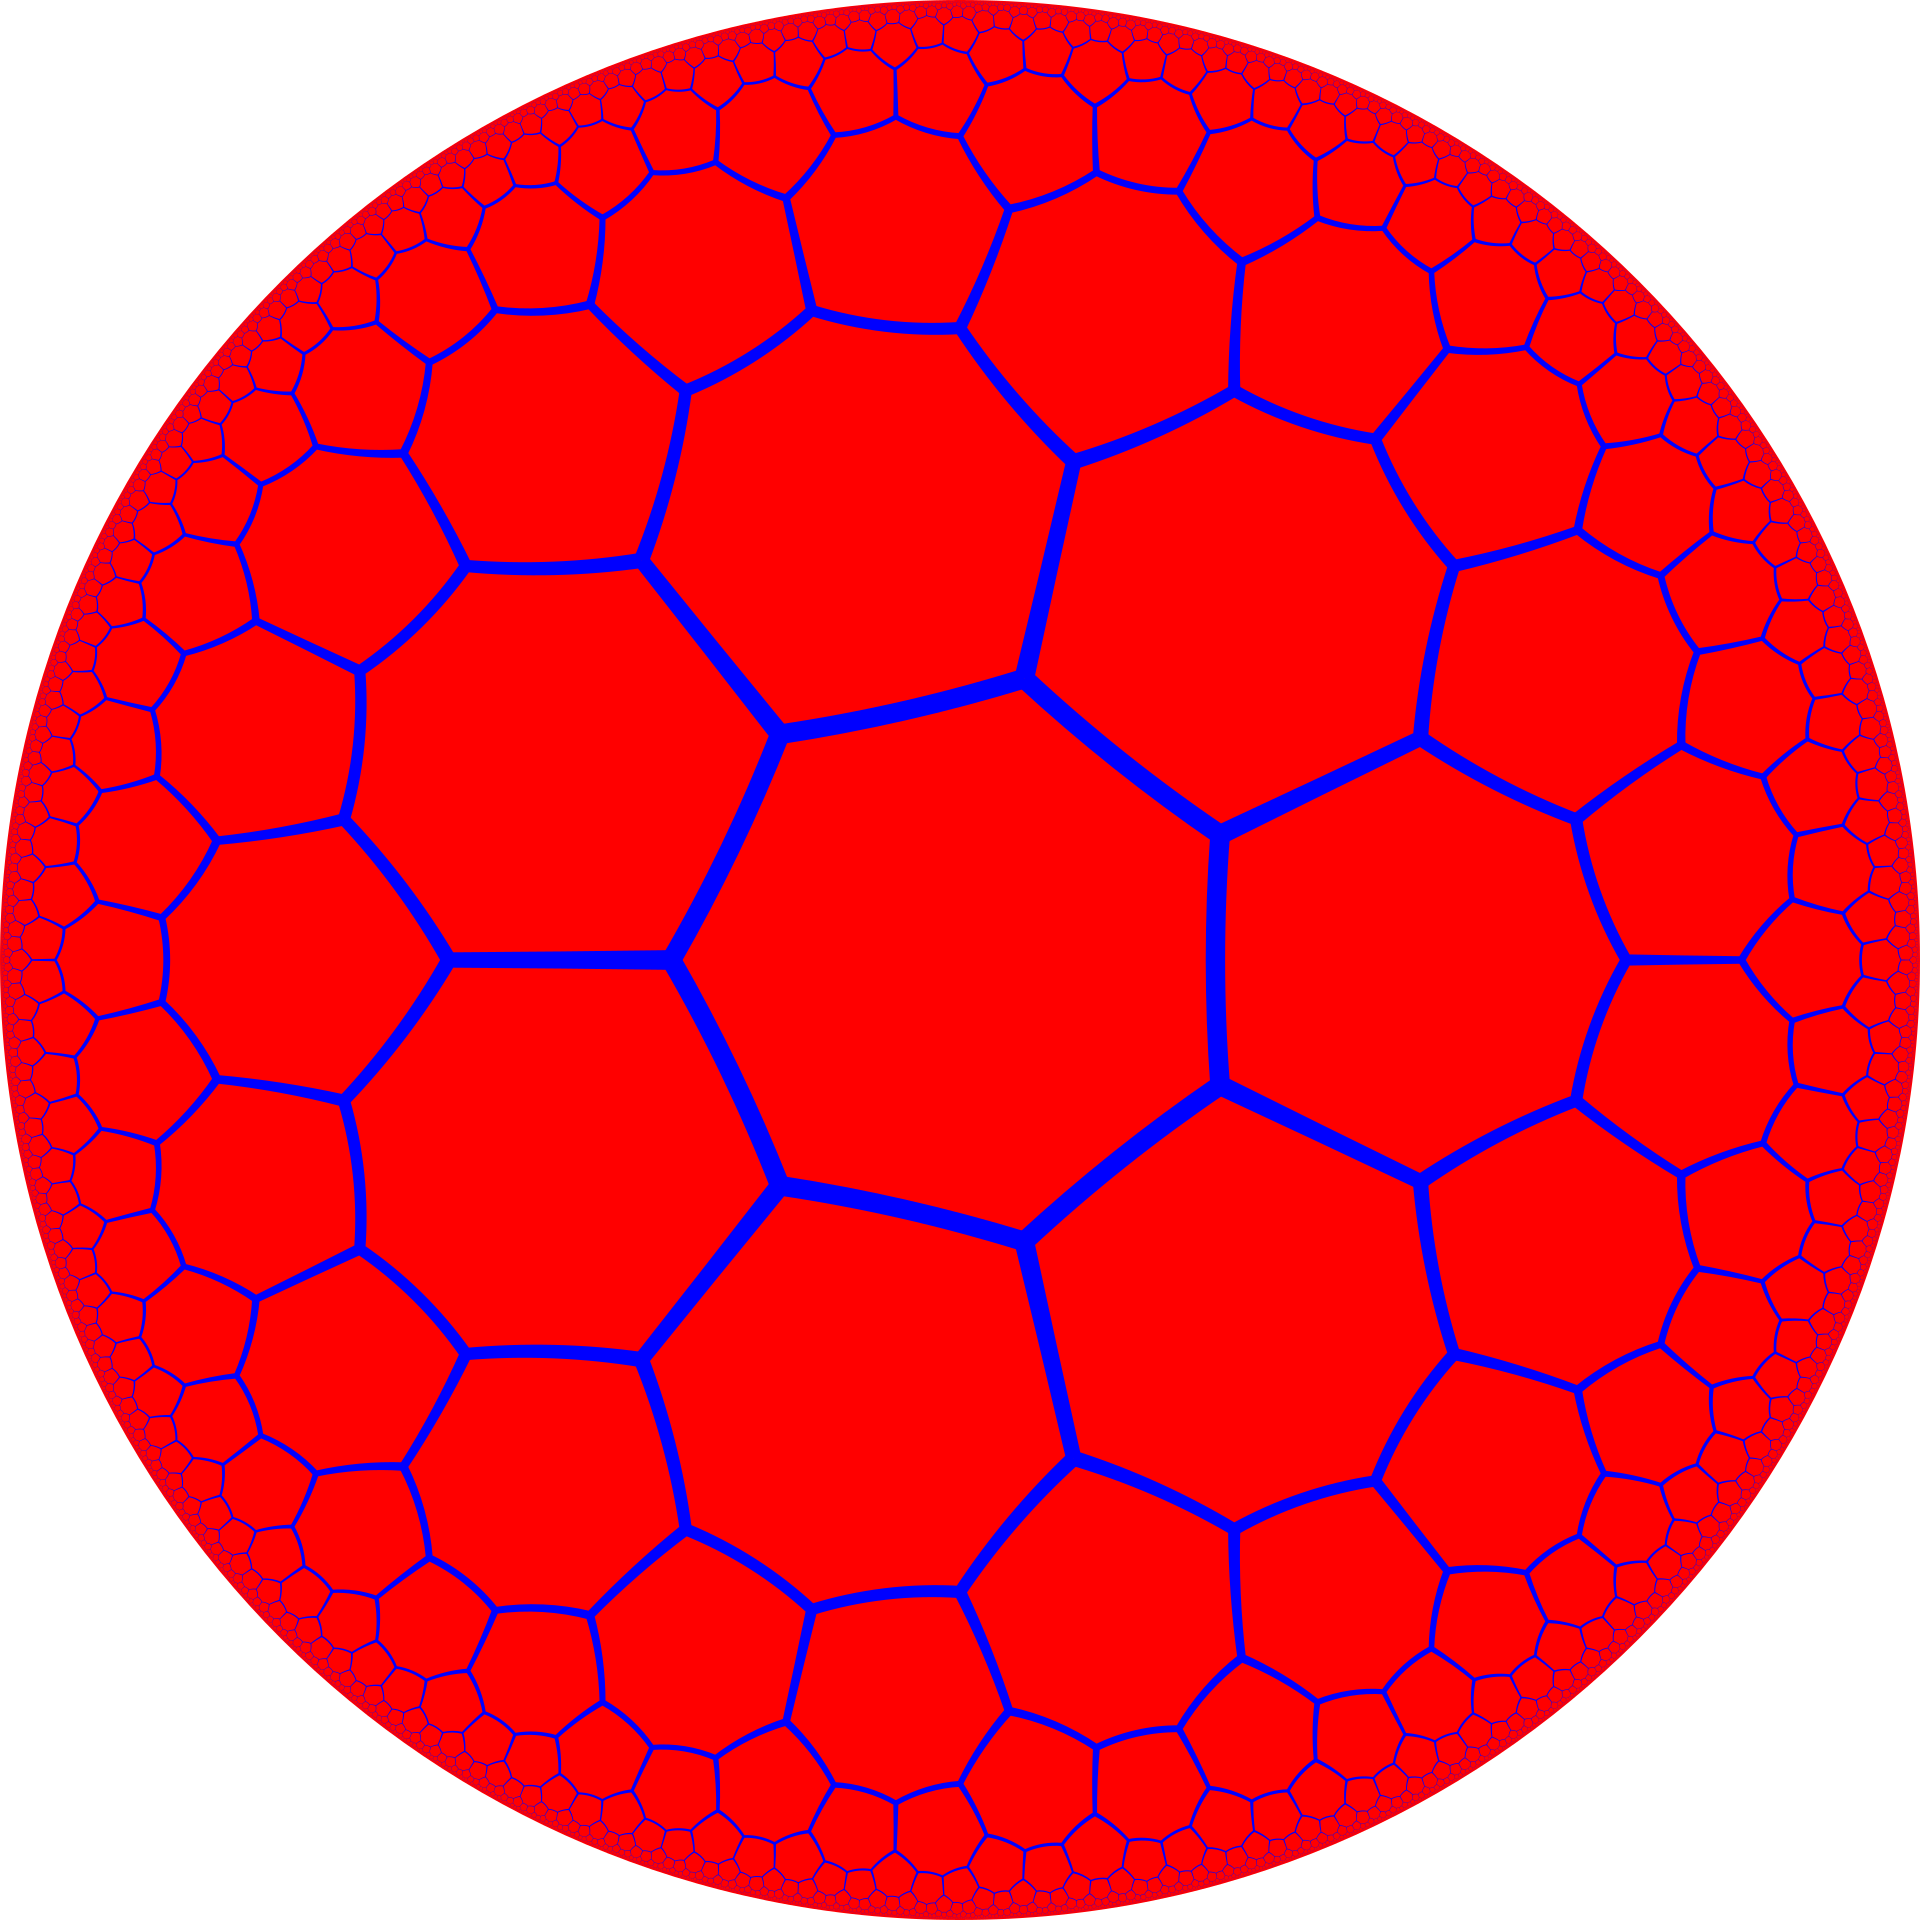 Hyperbolic tesselation